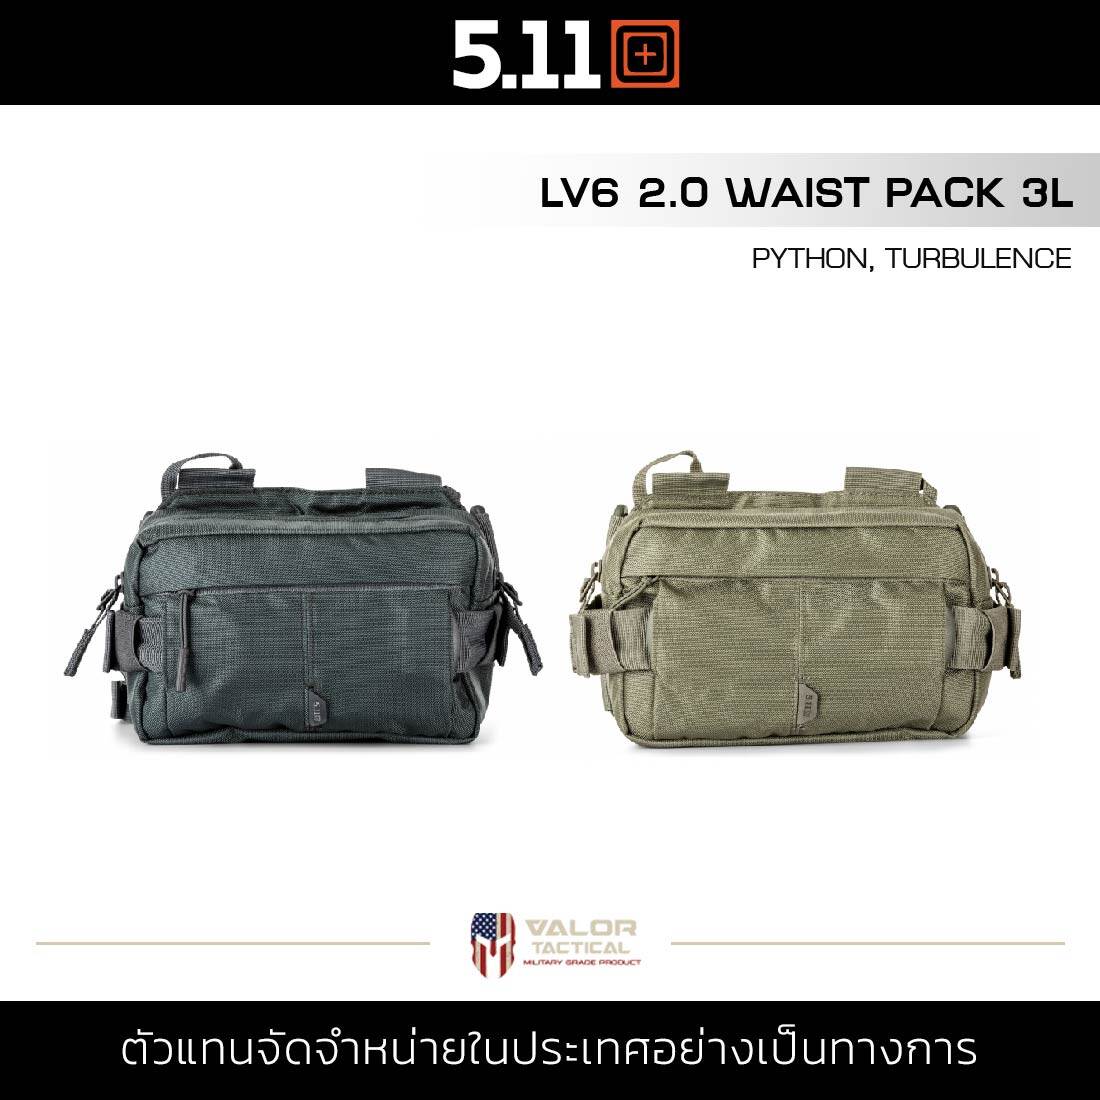 5.11 Tactical LV6 2.0 Waist Pack, Turbulence